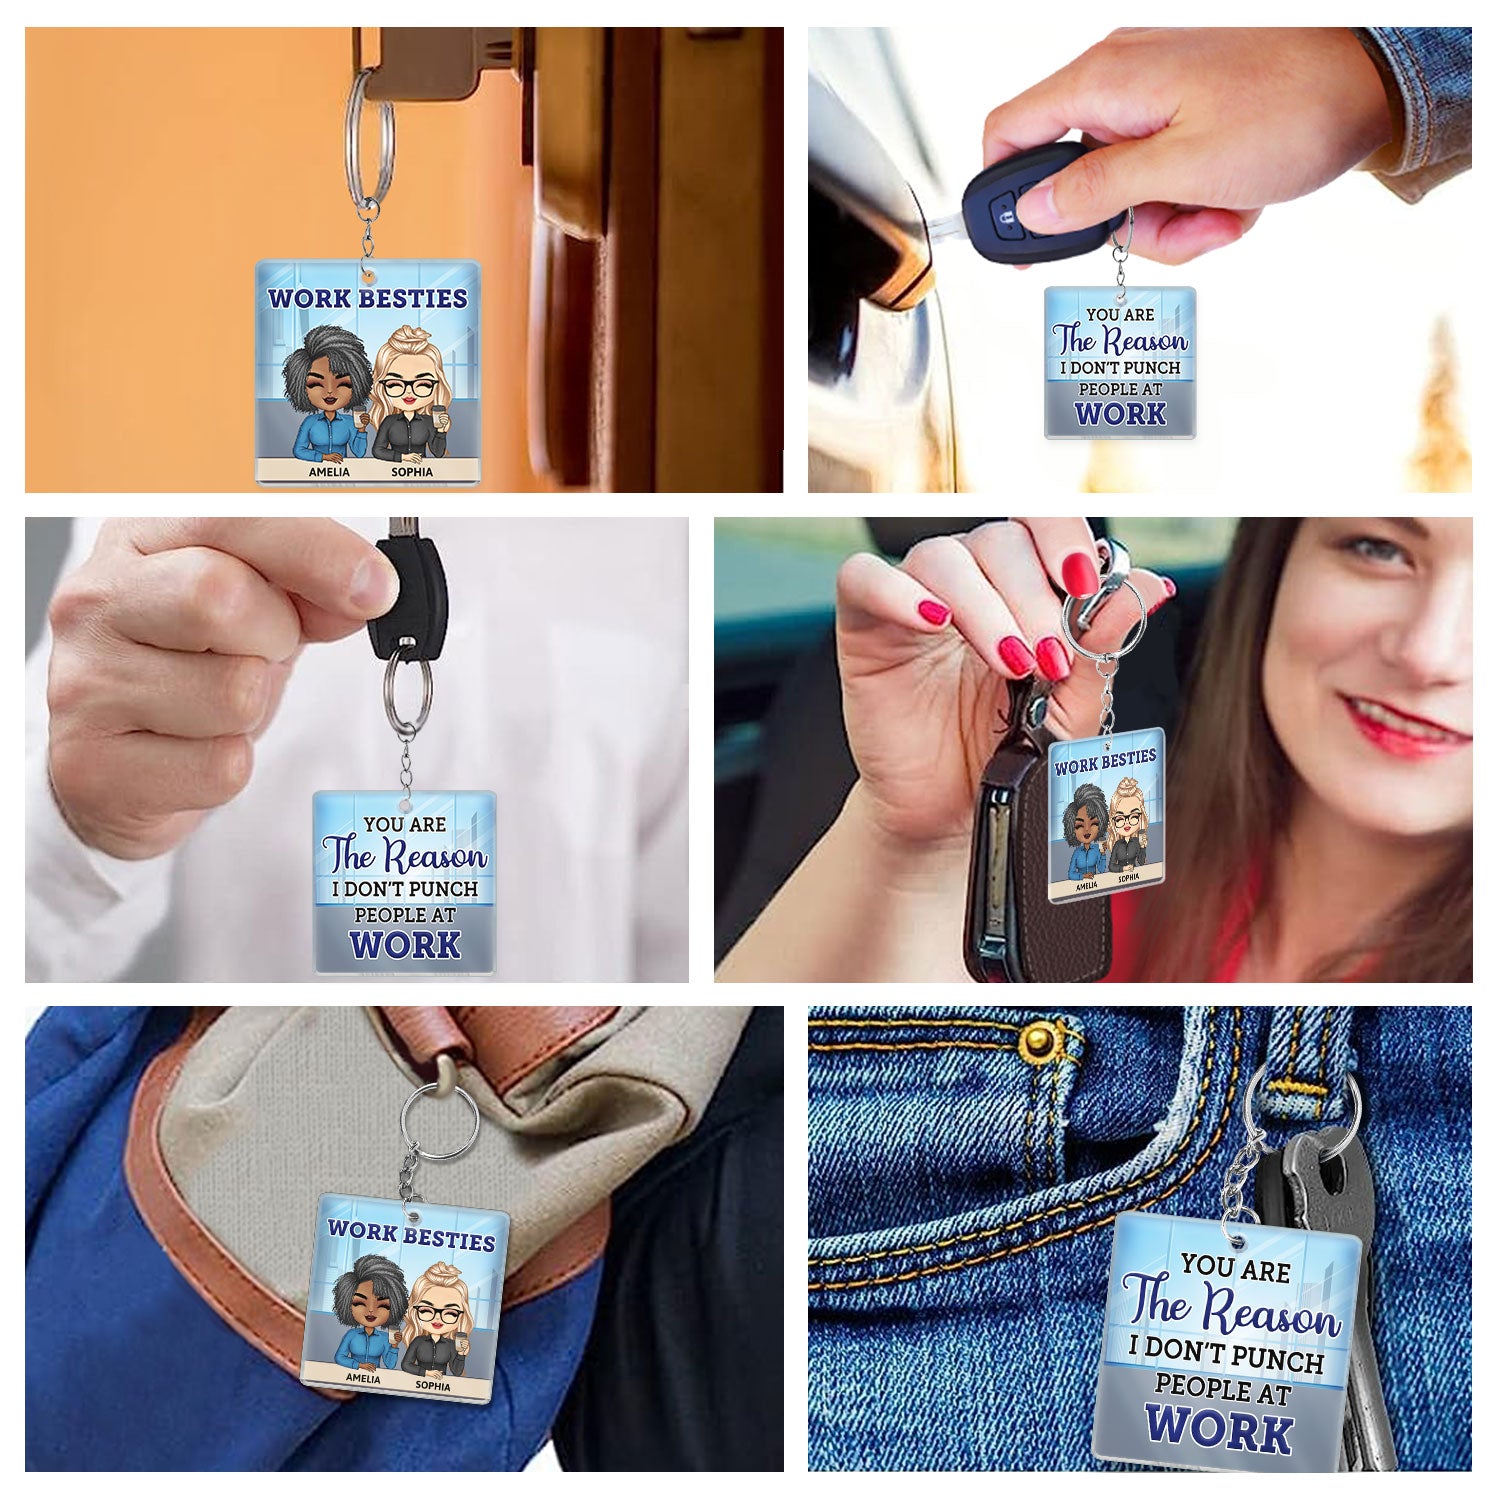 Personalized Mini Photo Keychain, Small Custom Leather Memory Photo,  Picture Keychains Personalized Album, Mini Cute Key